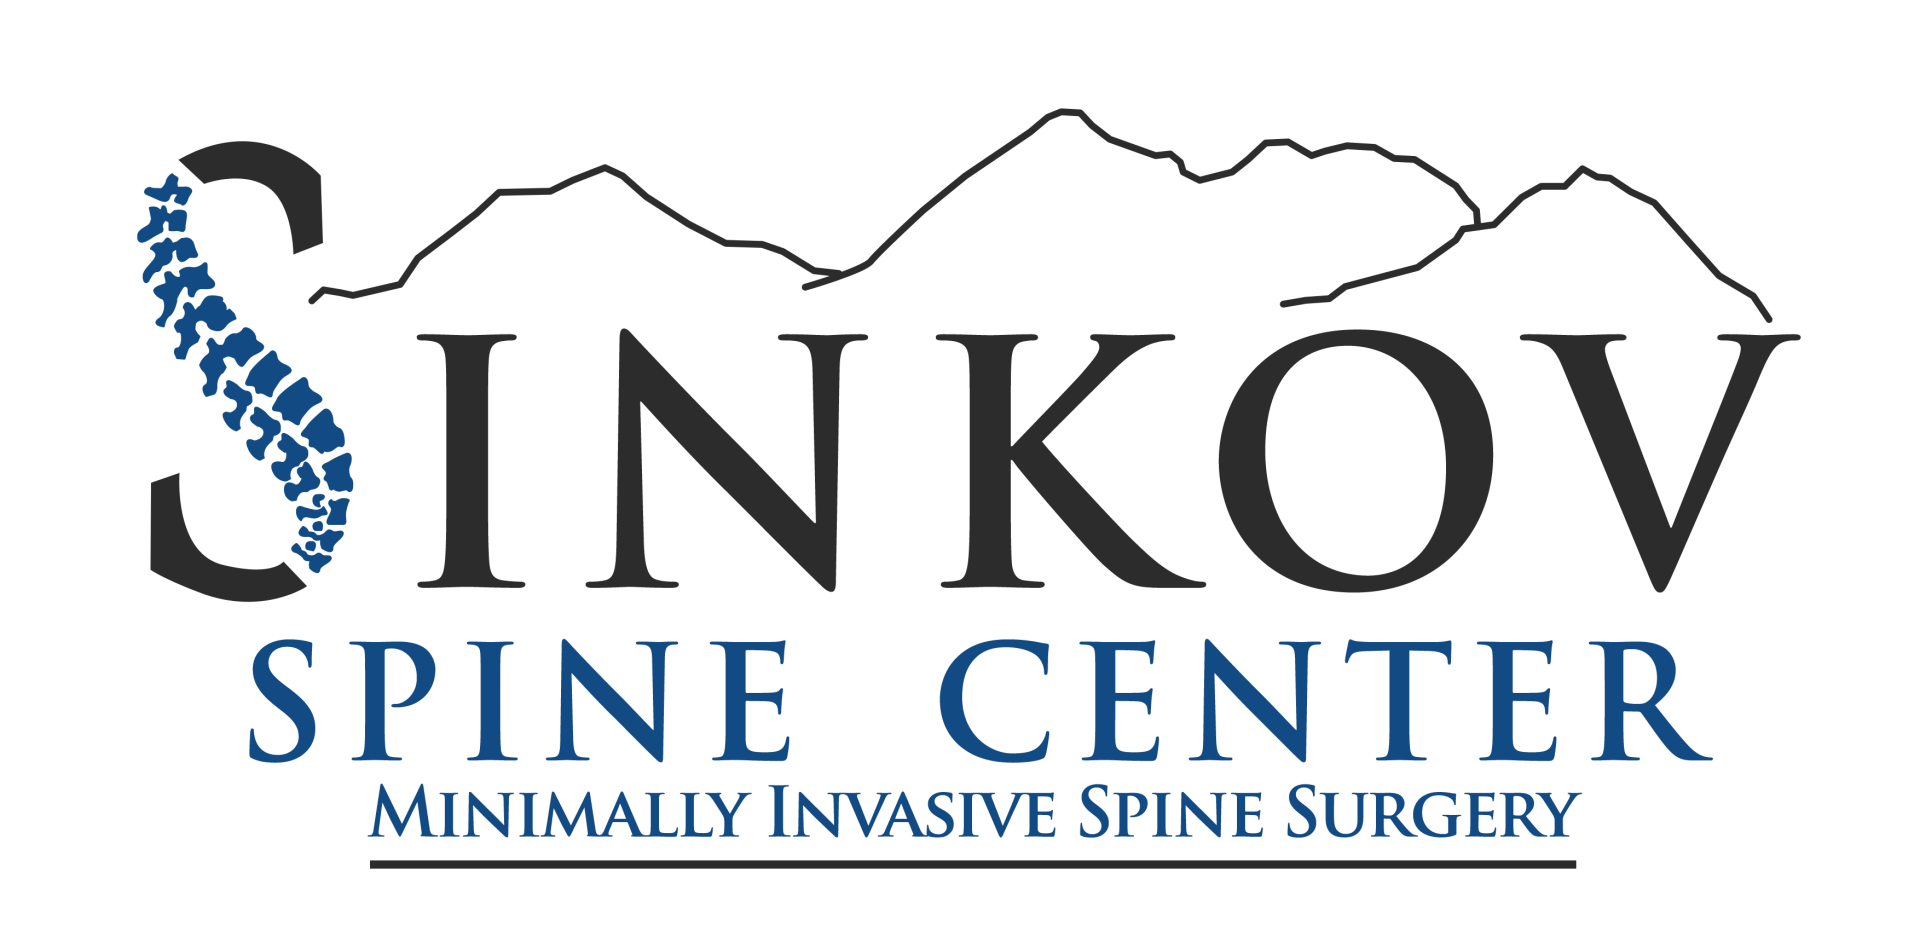 Dr.sinkov Logo